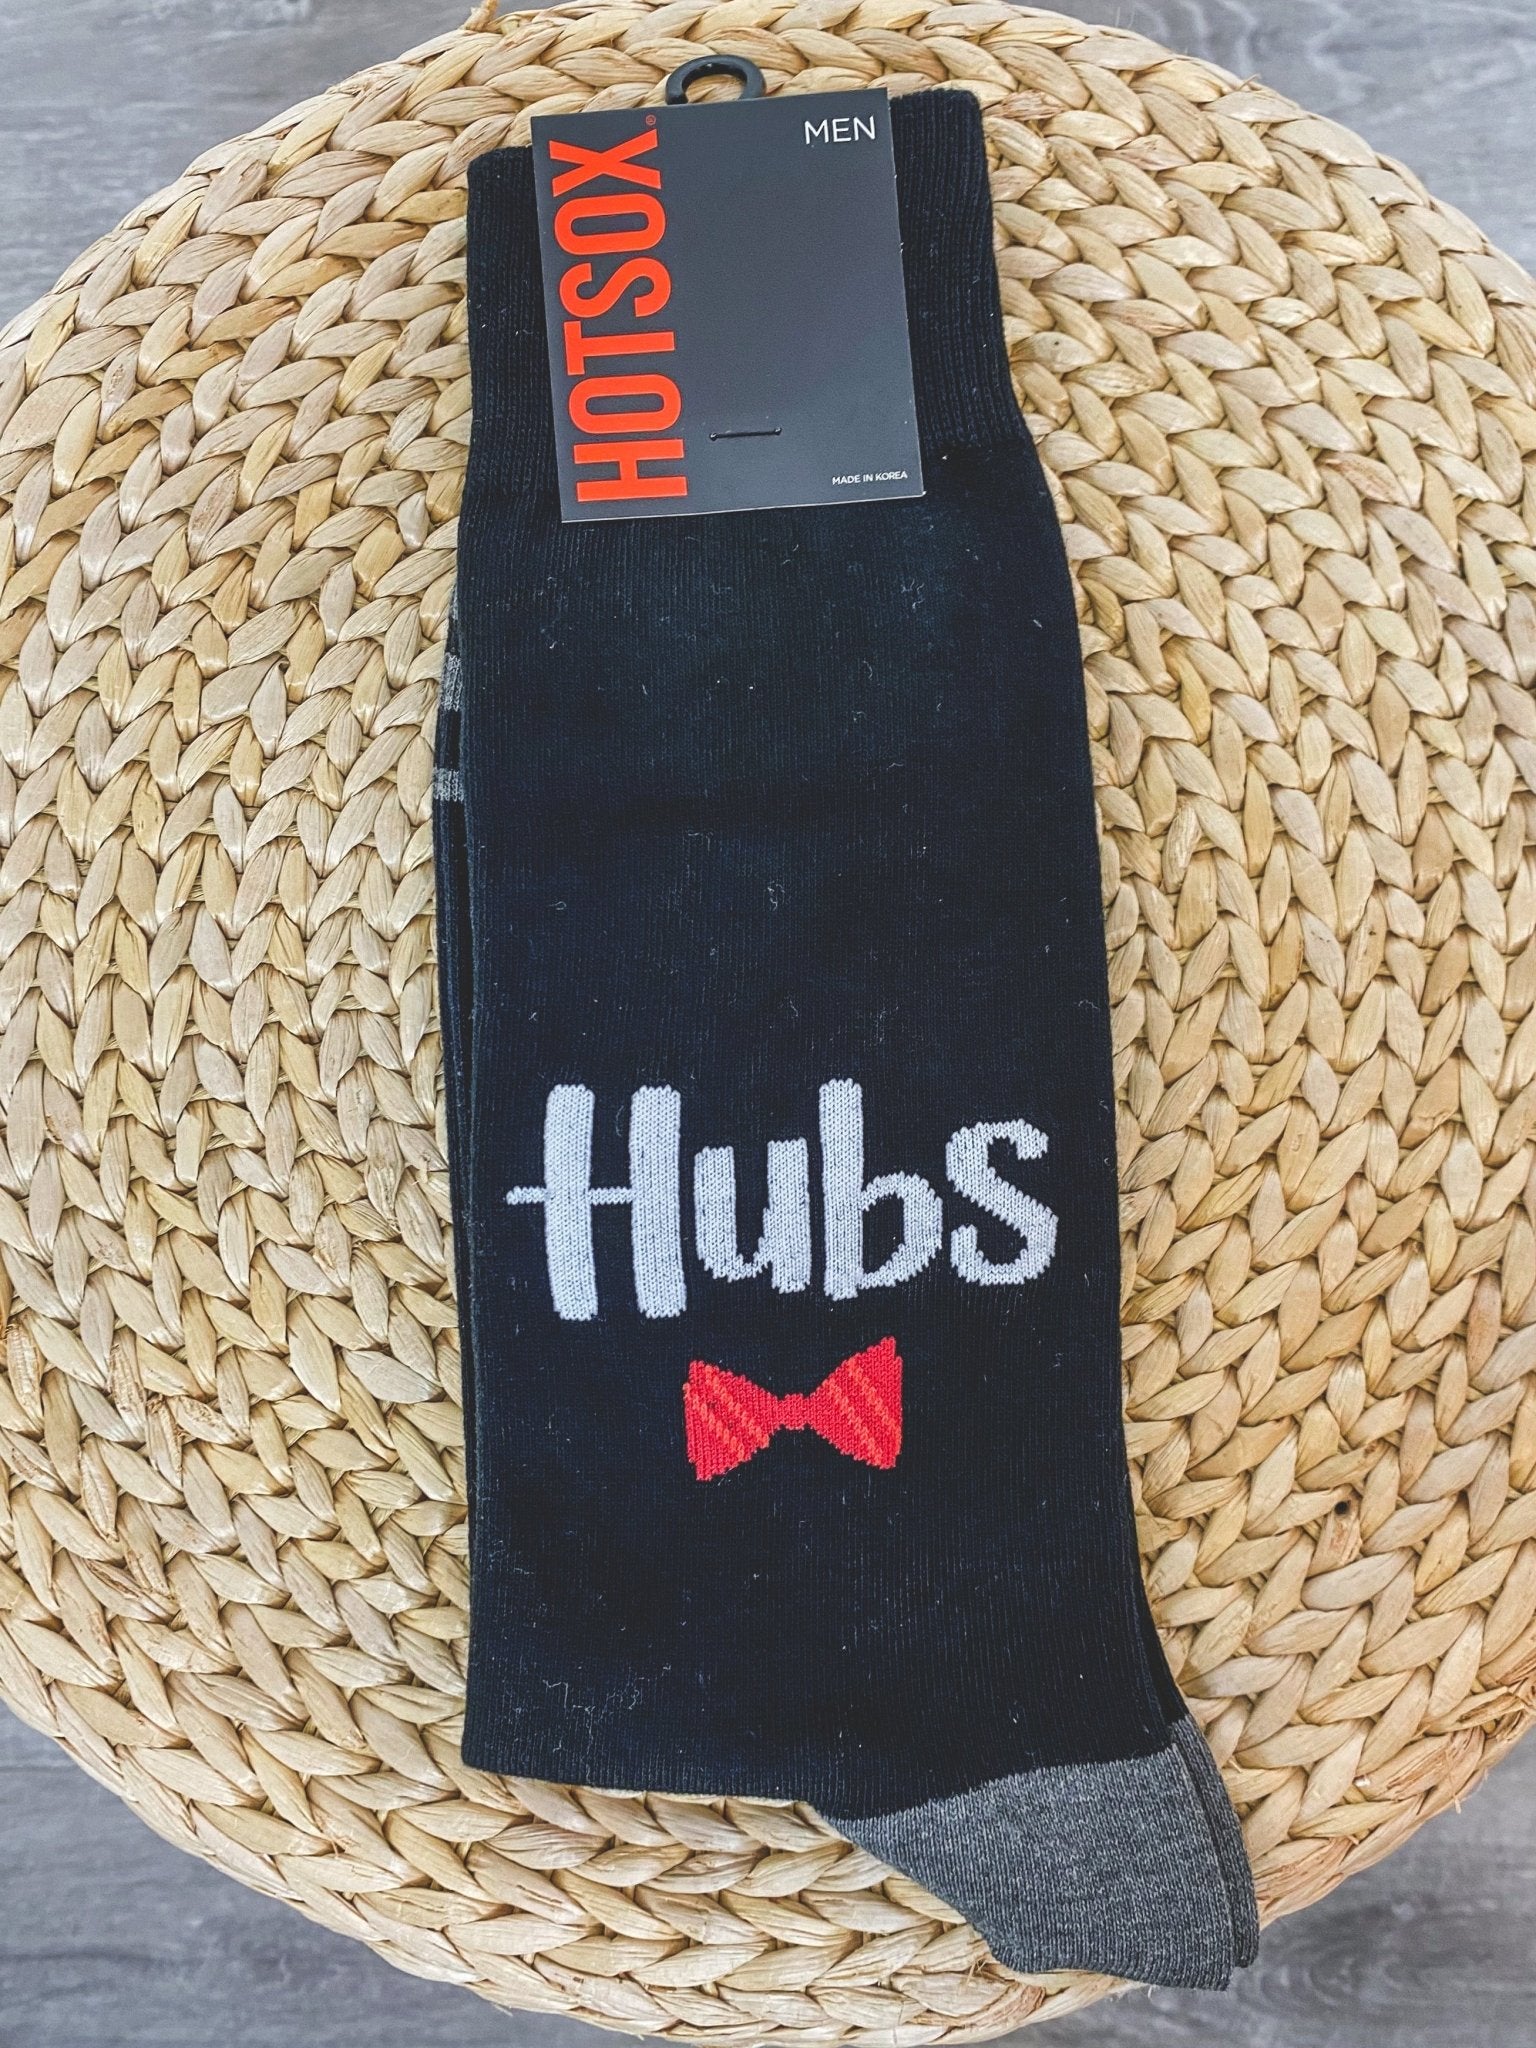 HotSox men's Hubs bowtie socks black - Trendy Socks at Lush Fashion Lounge Boutique in Oklahoma City